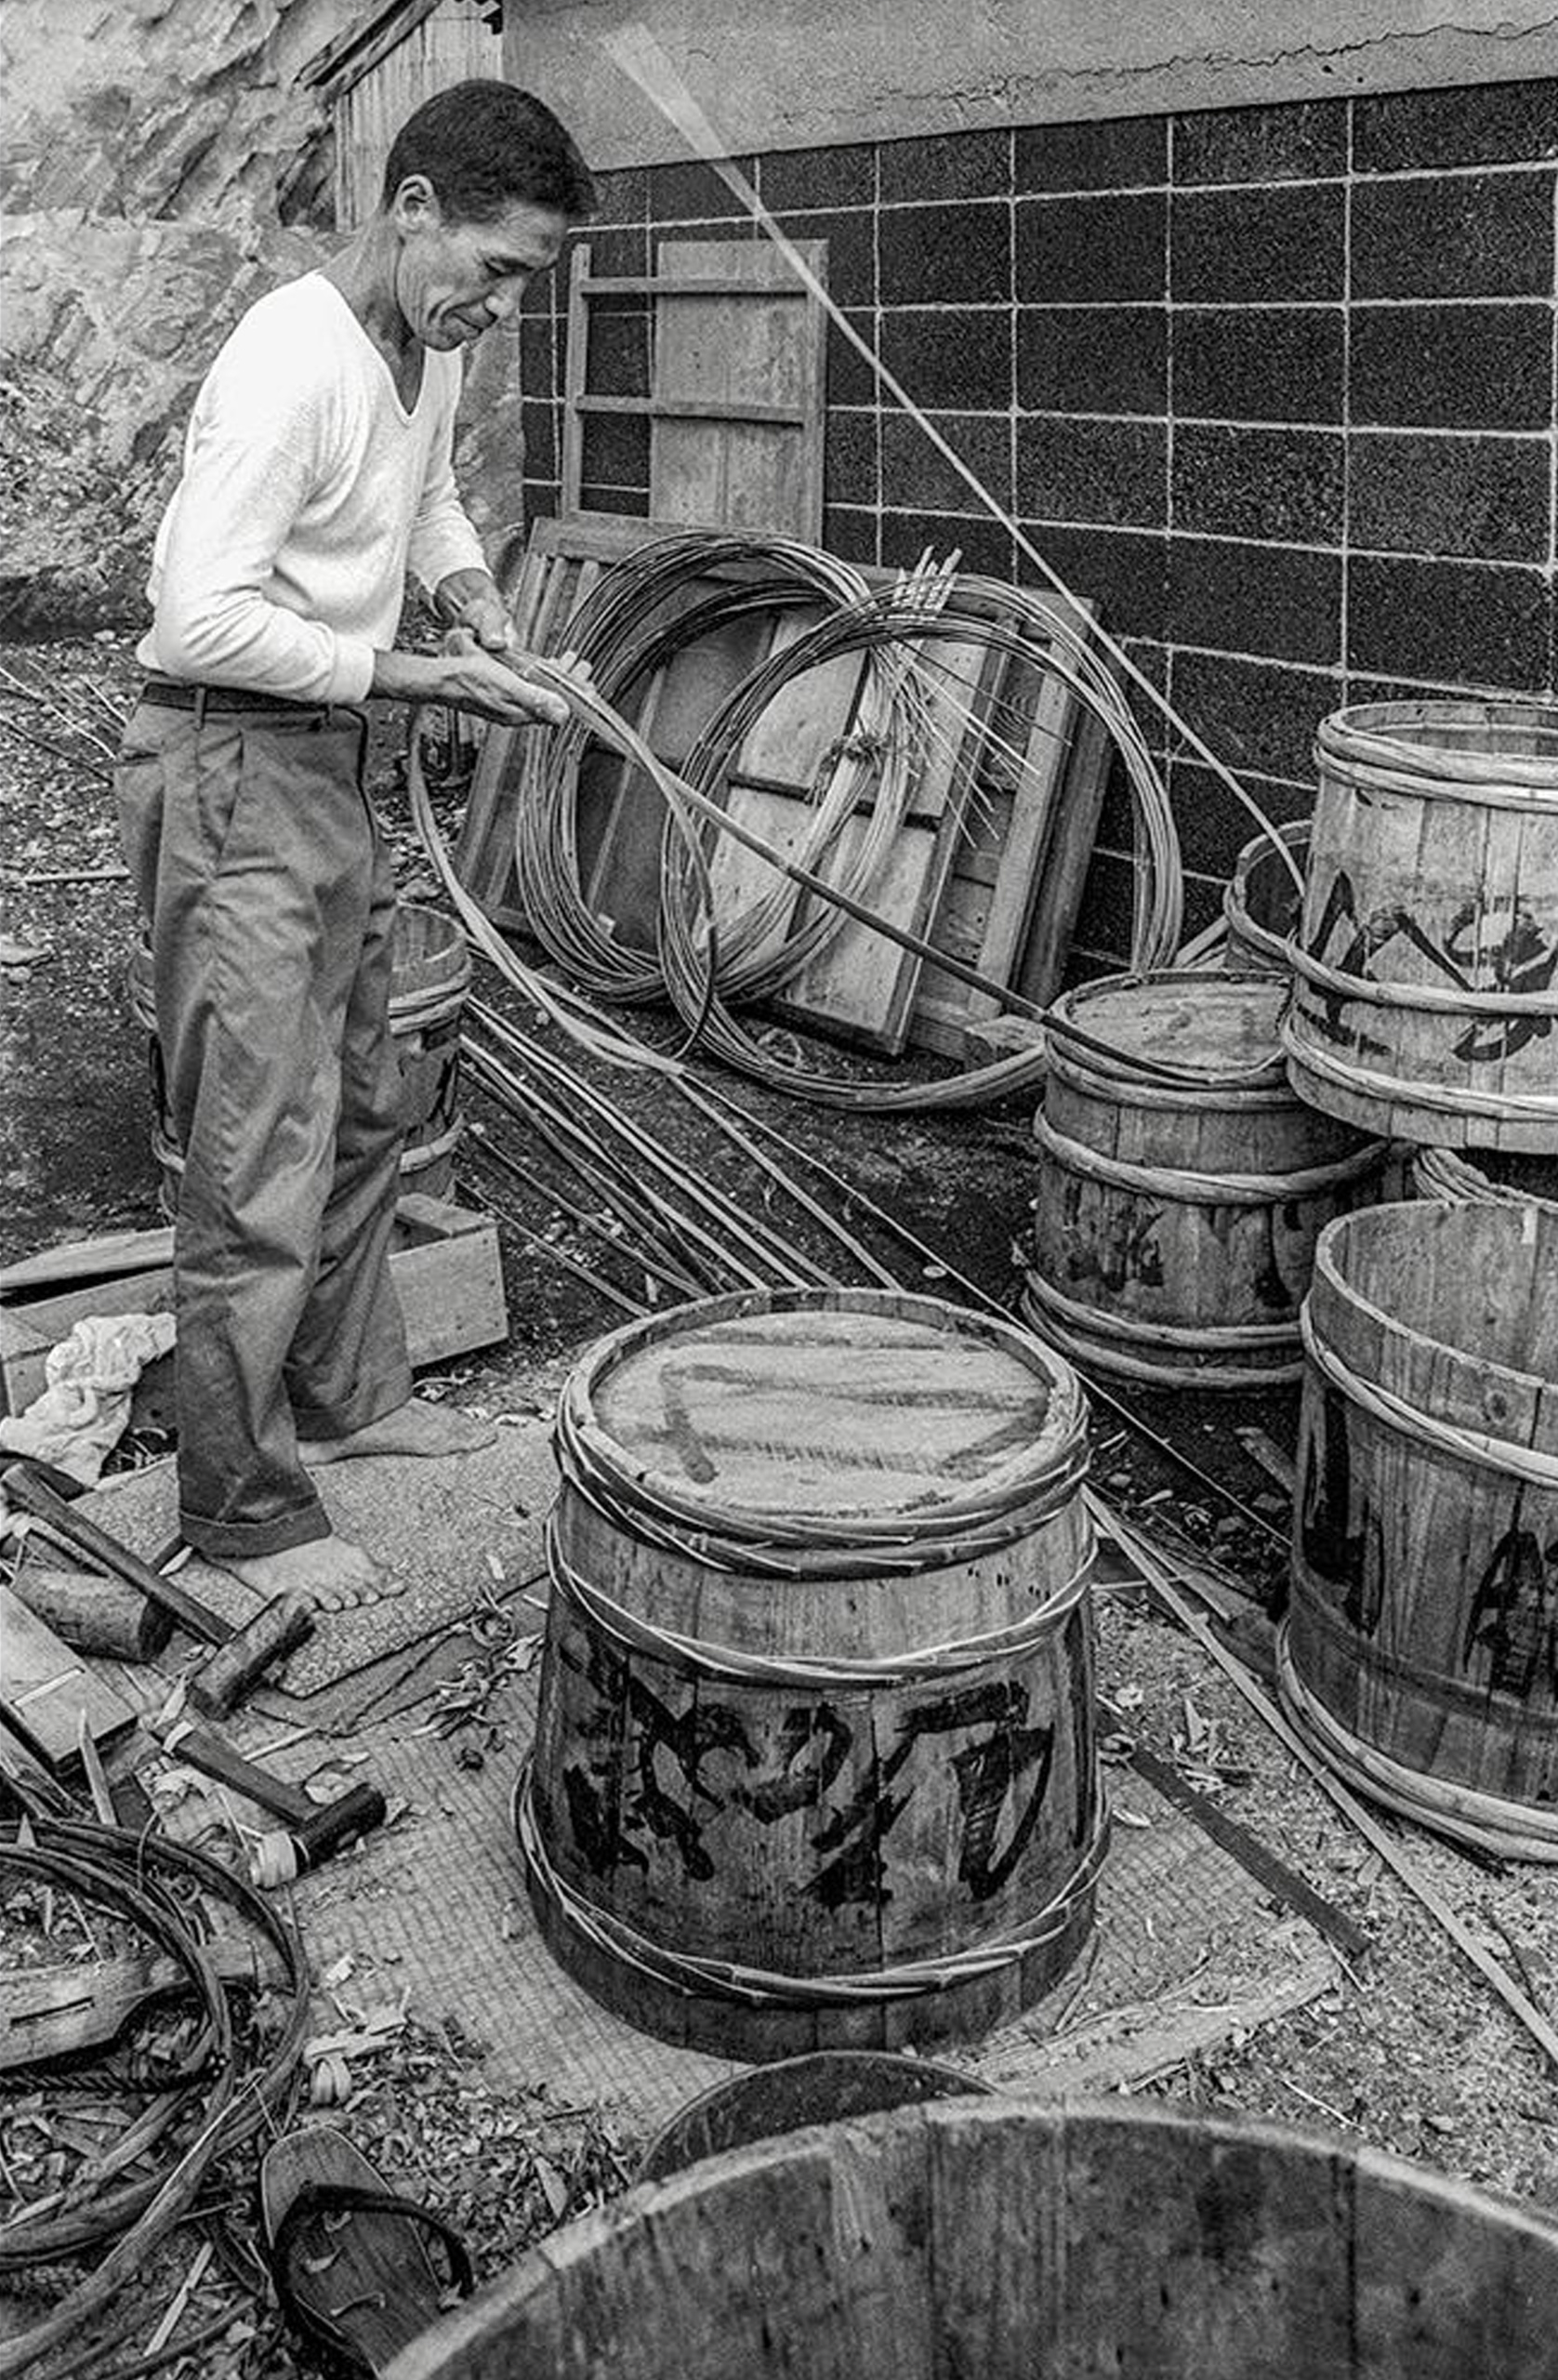     Ted Scott, Barrel Maker, Katsuyama, Japan, 1973

